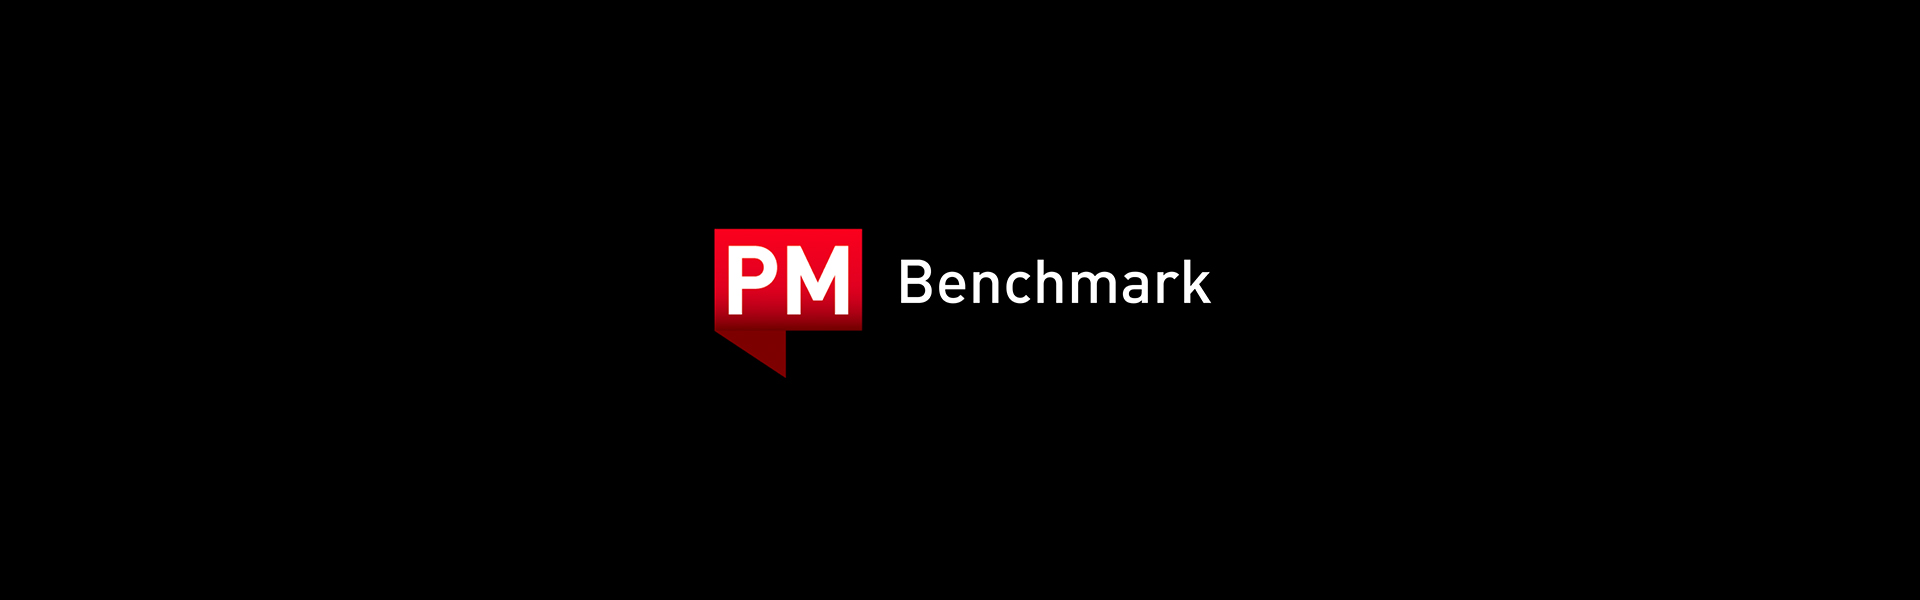 PM Benchmark